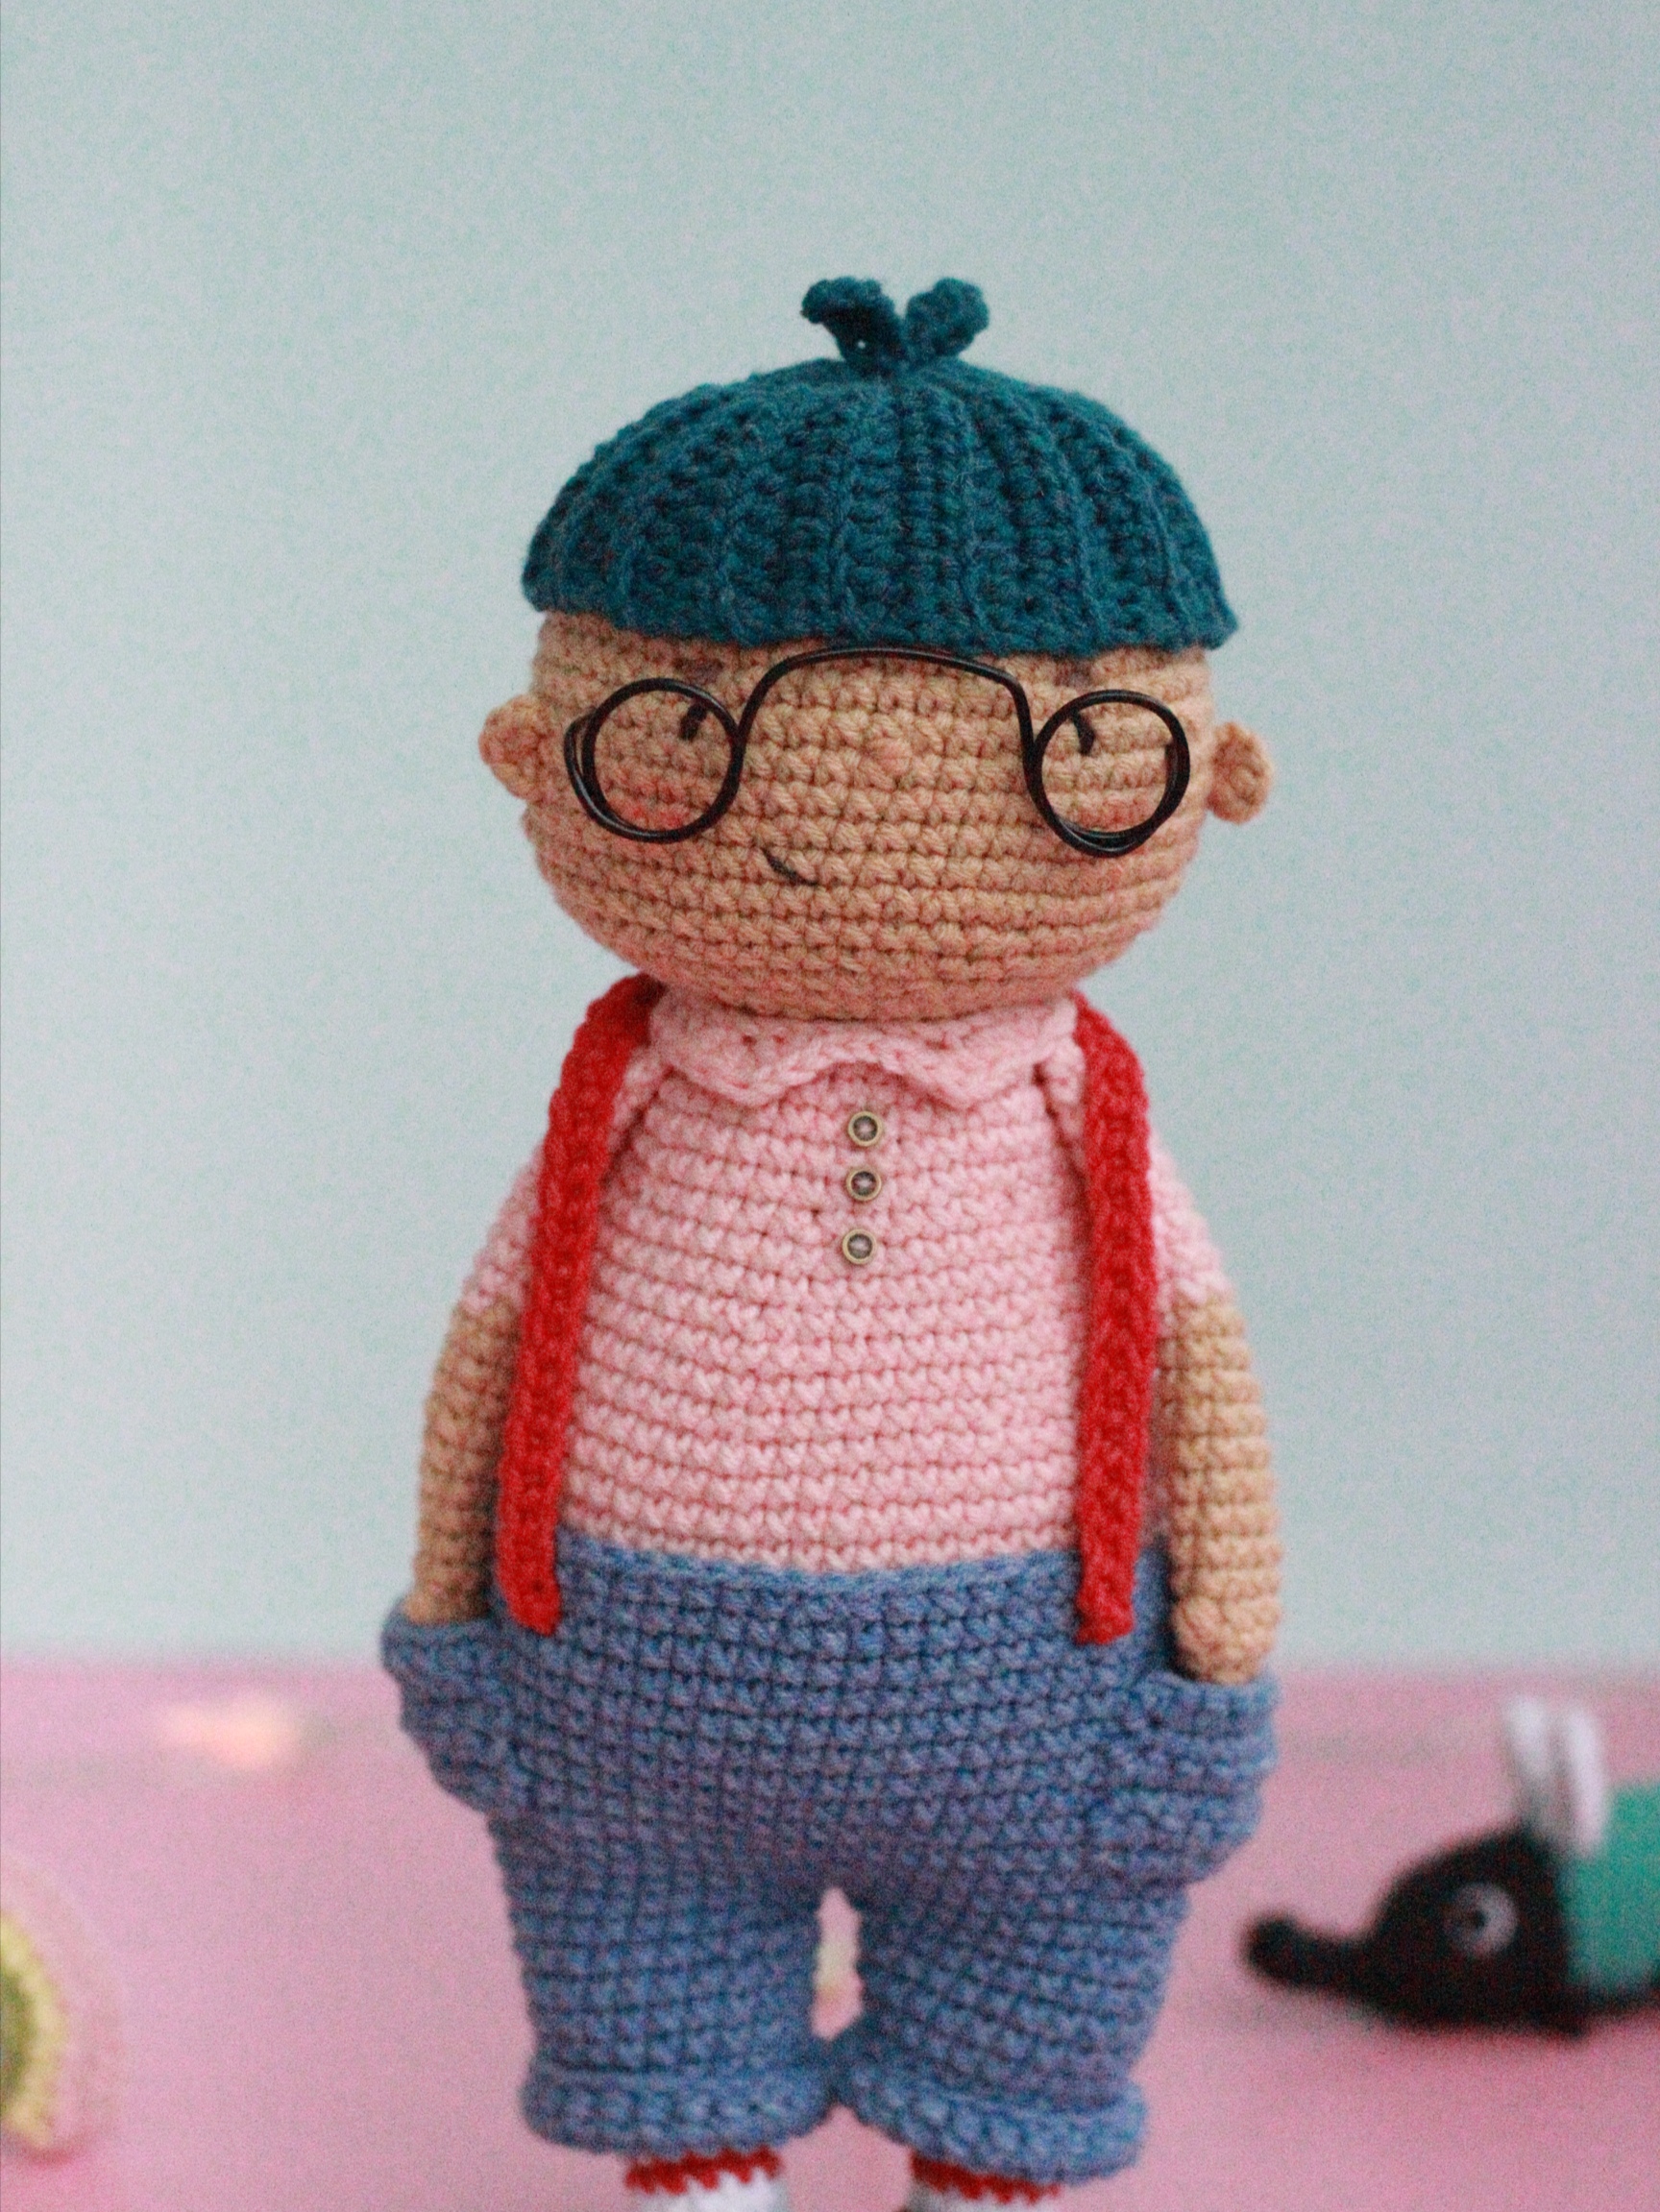 Loviver Christmas Crochet Kits DIY Crochet Doll Kits for